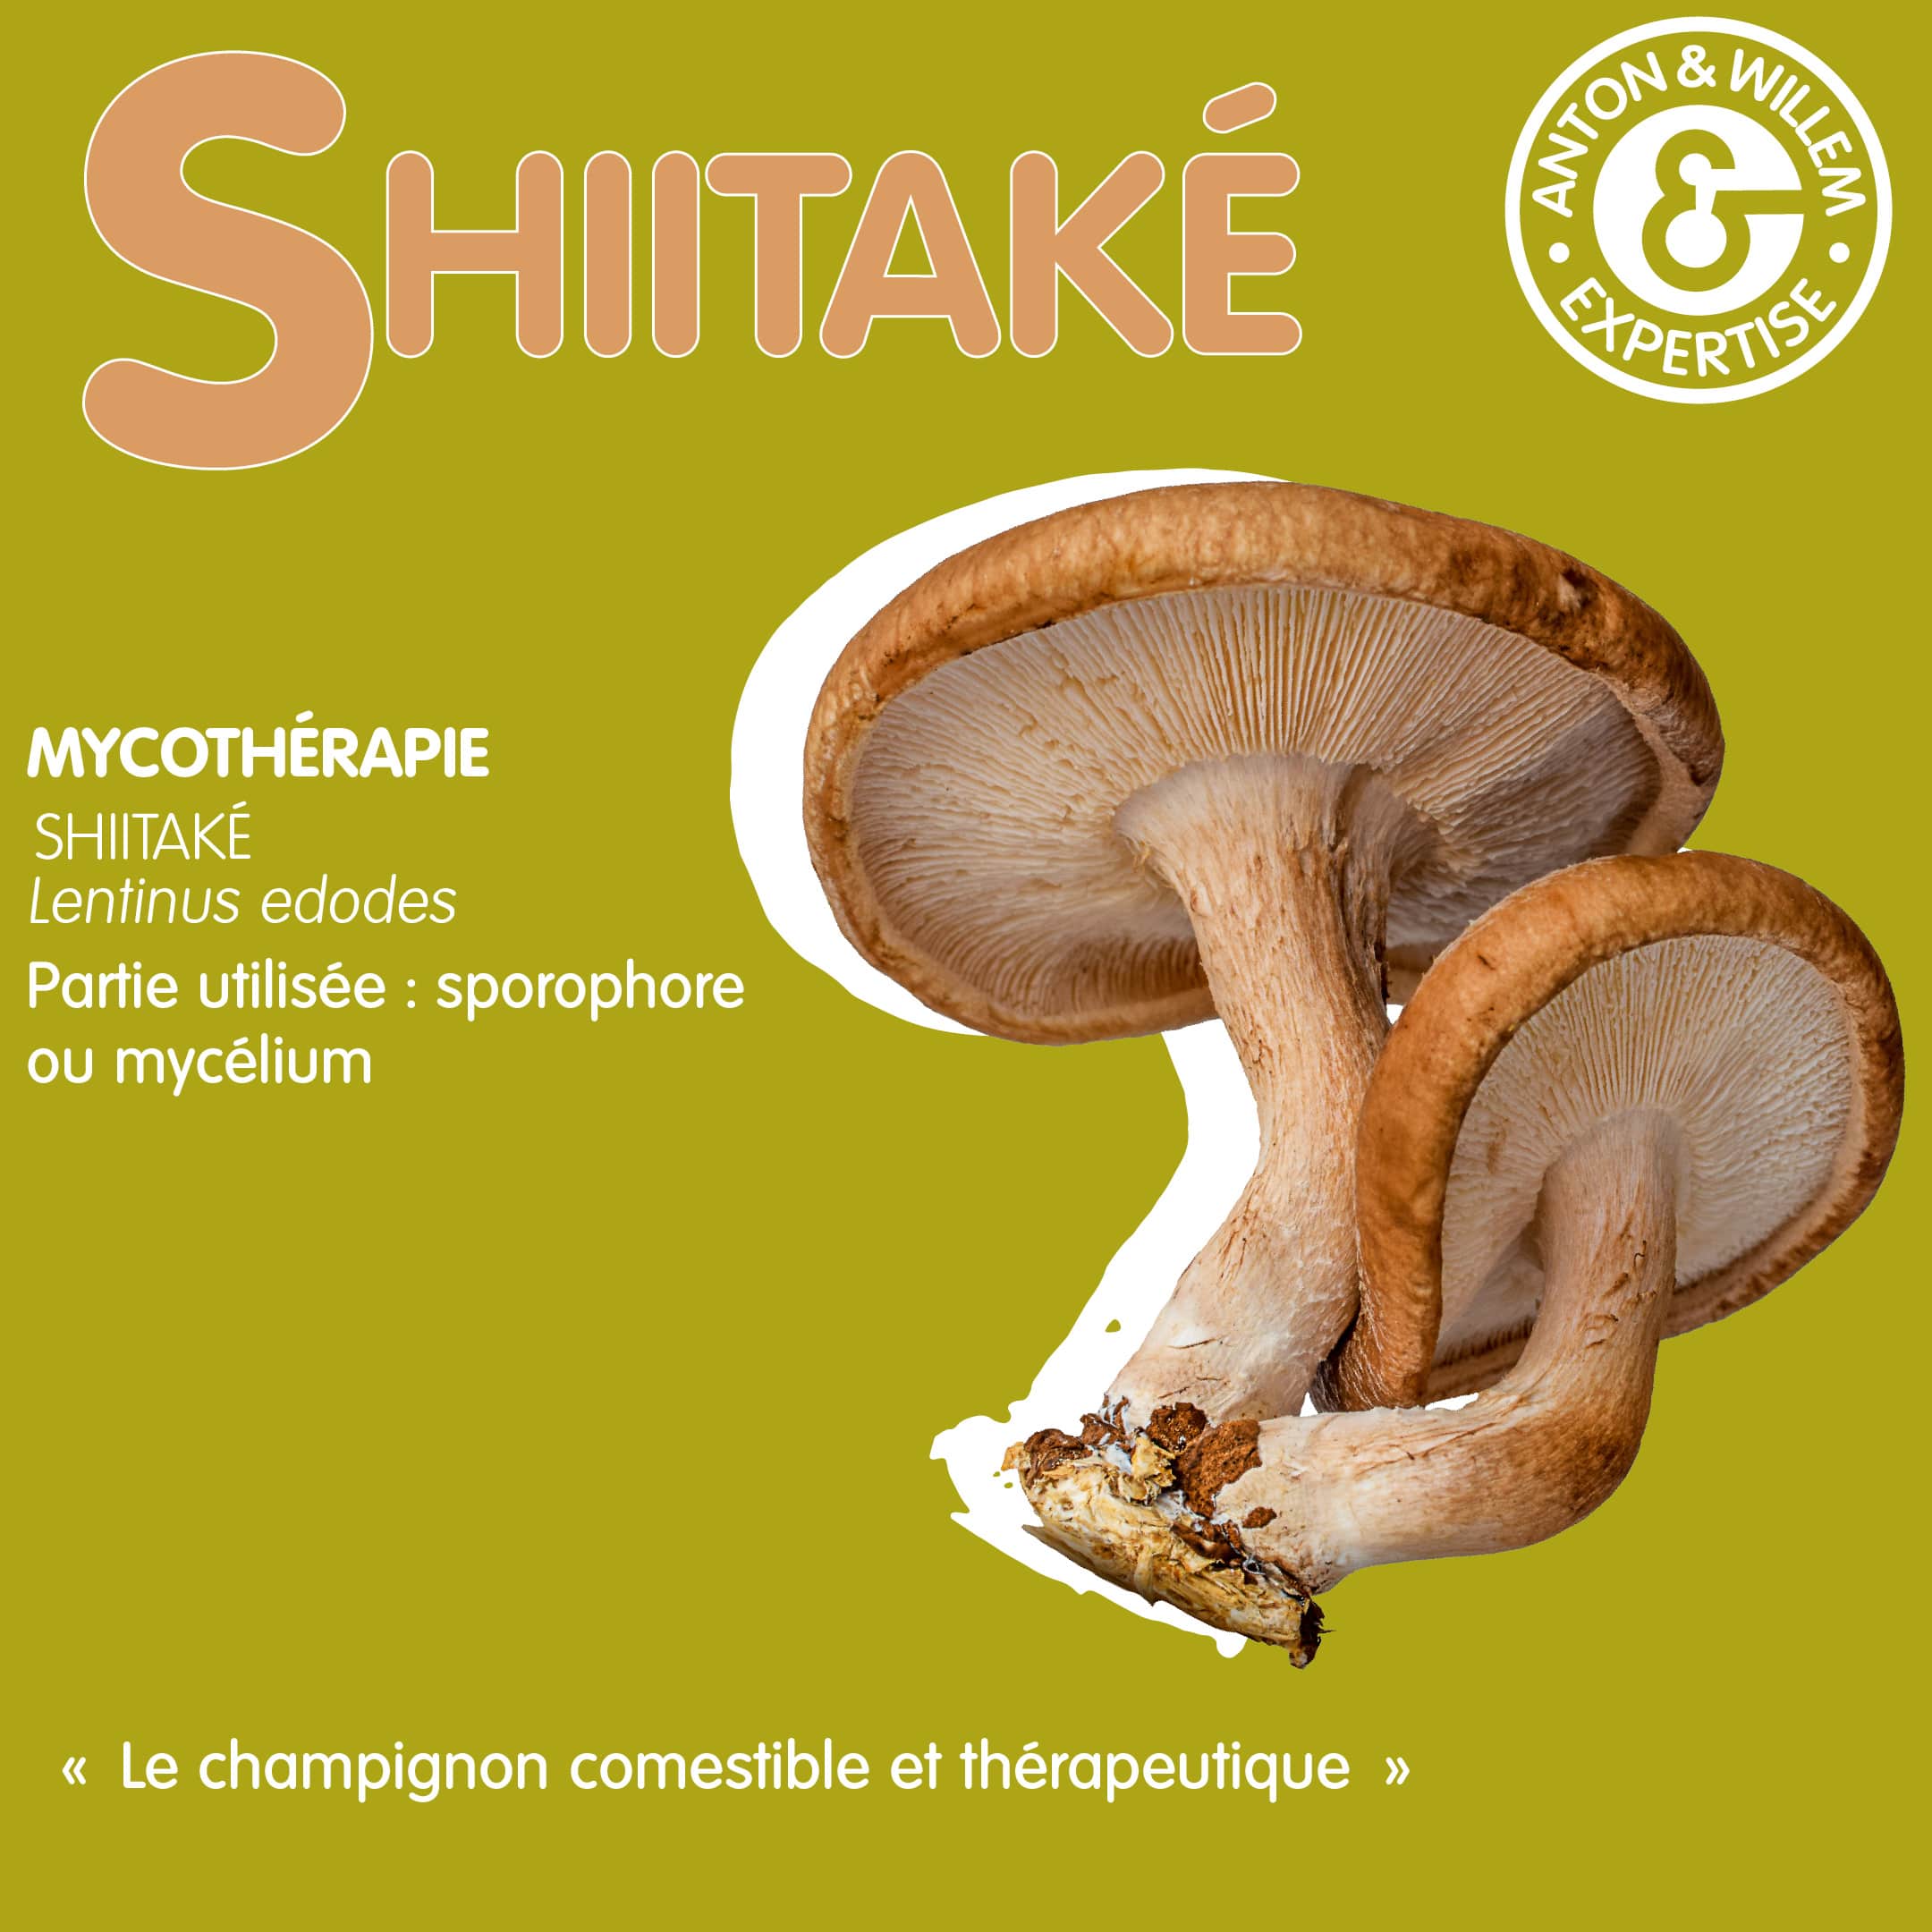 Shiitaké en mycothérapie